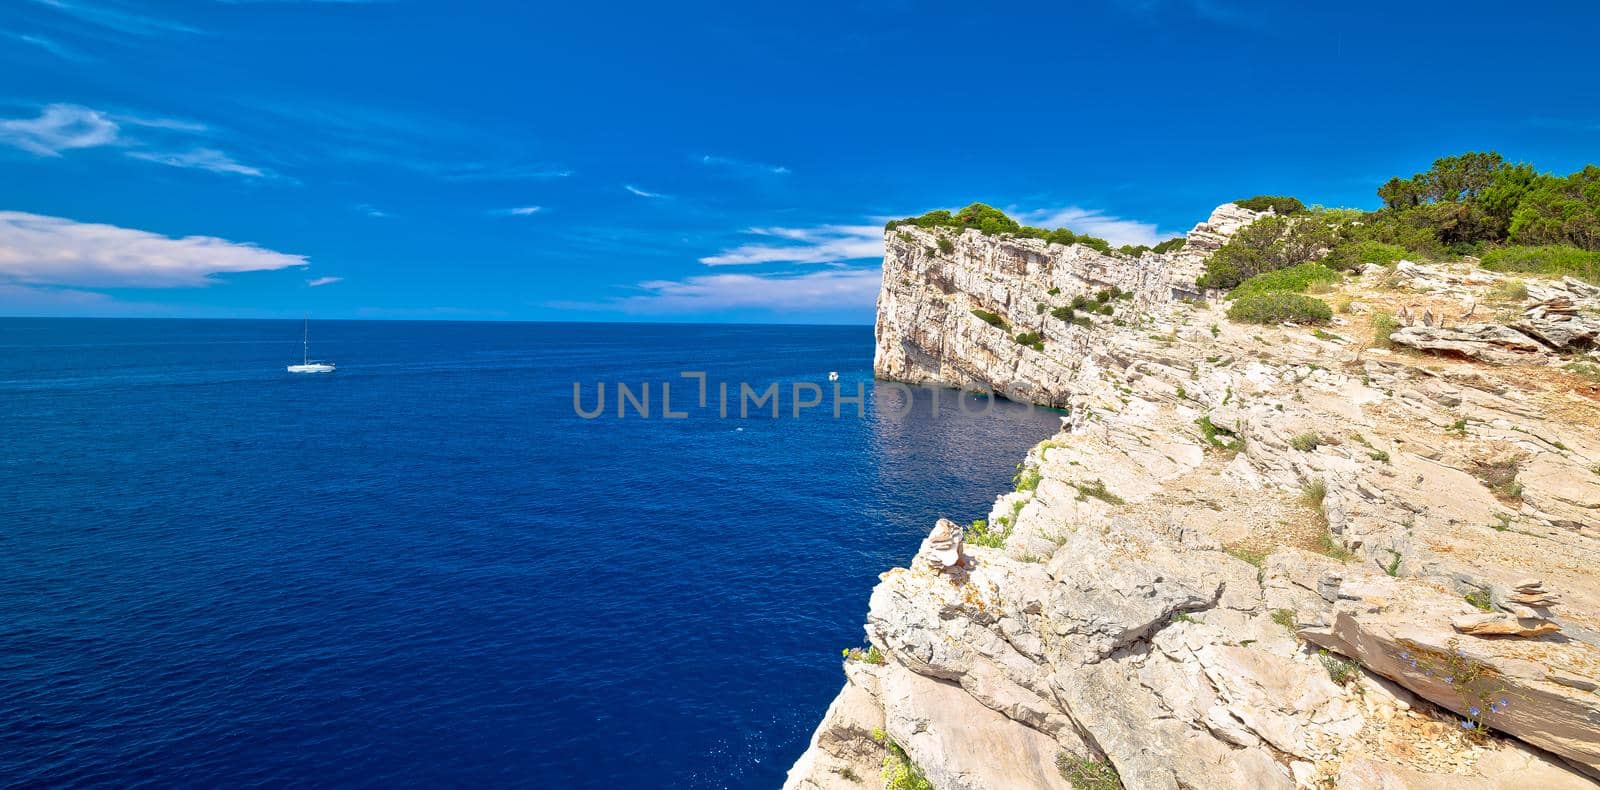 Kornati archipelago national park. Spectacular cliffs of Telascica bay above blue Adriatic sea by xbrchx